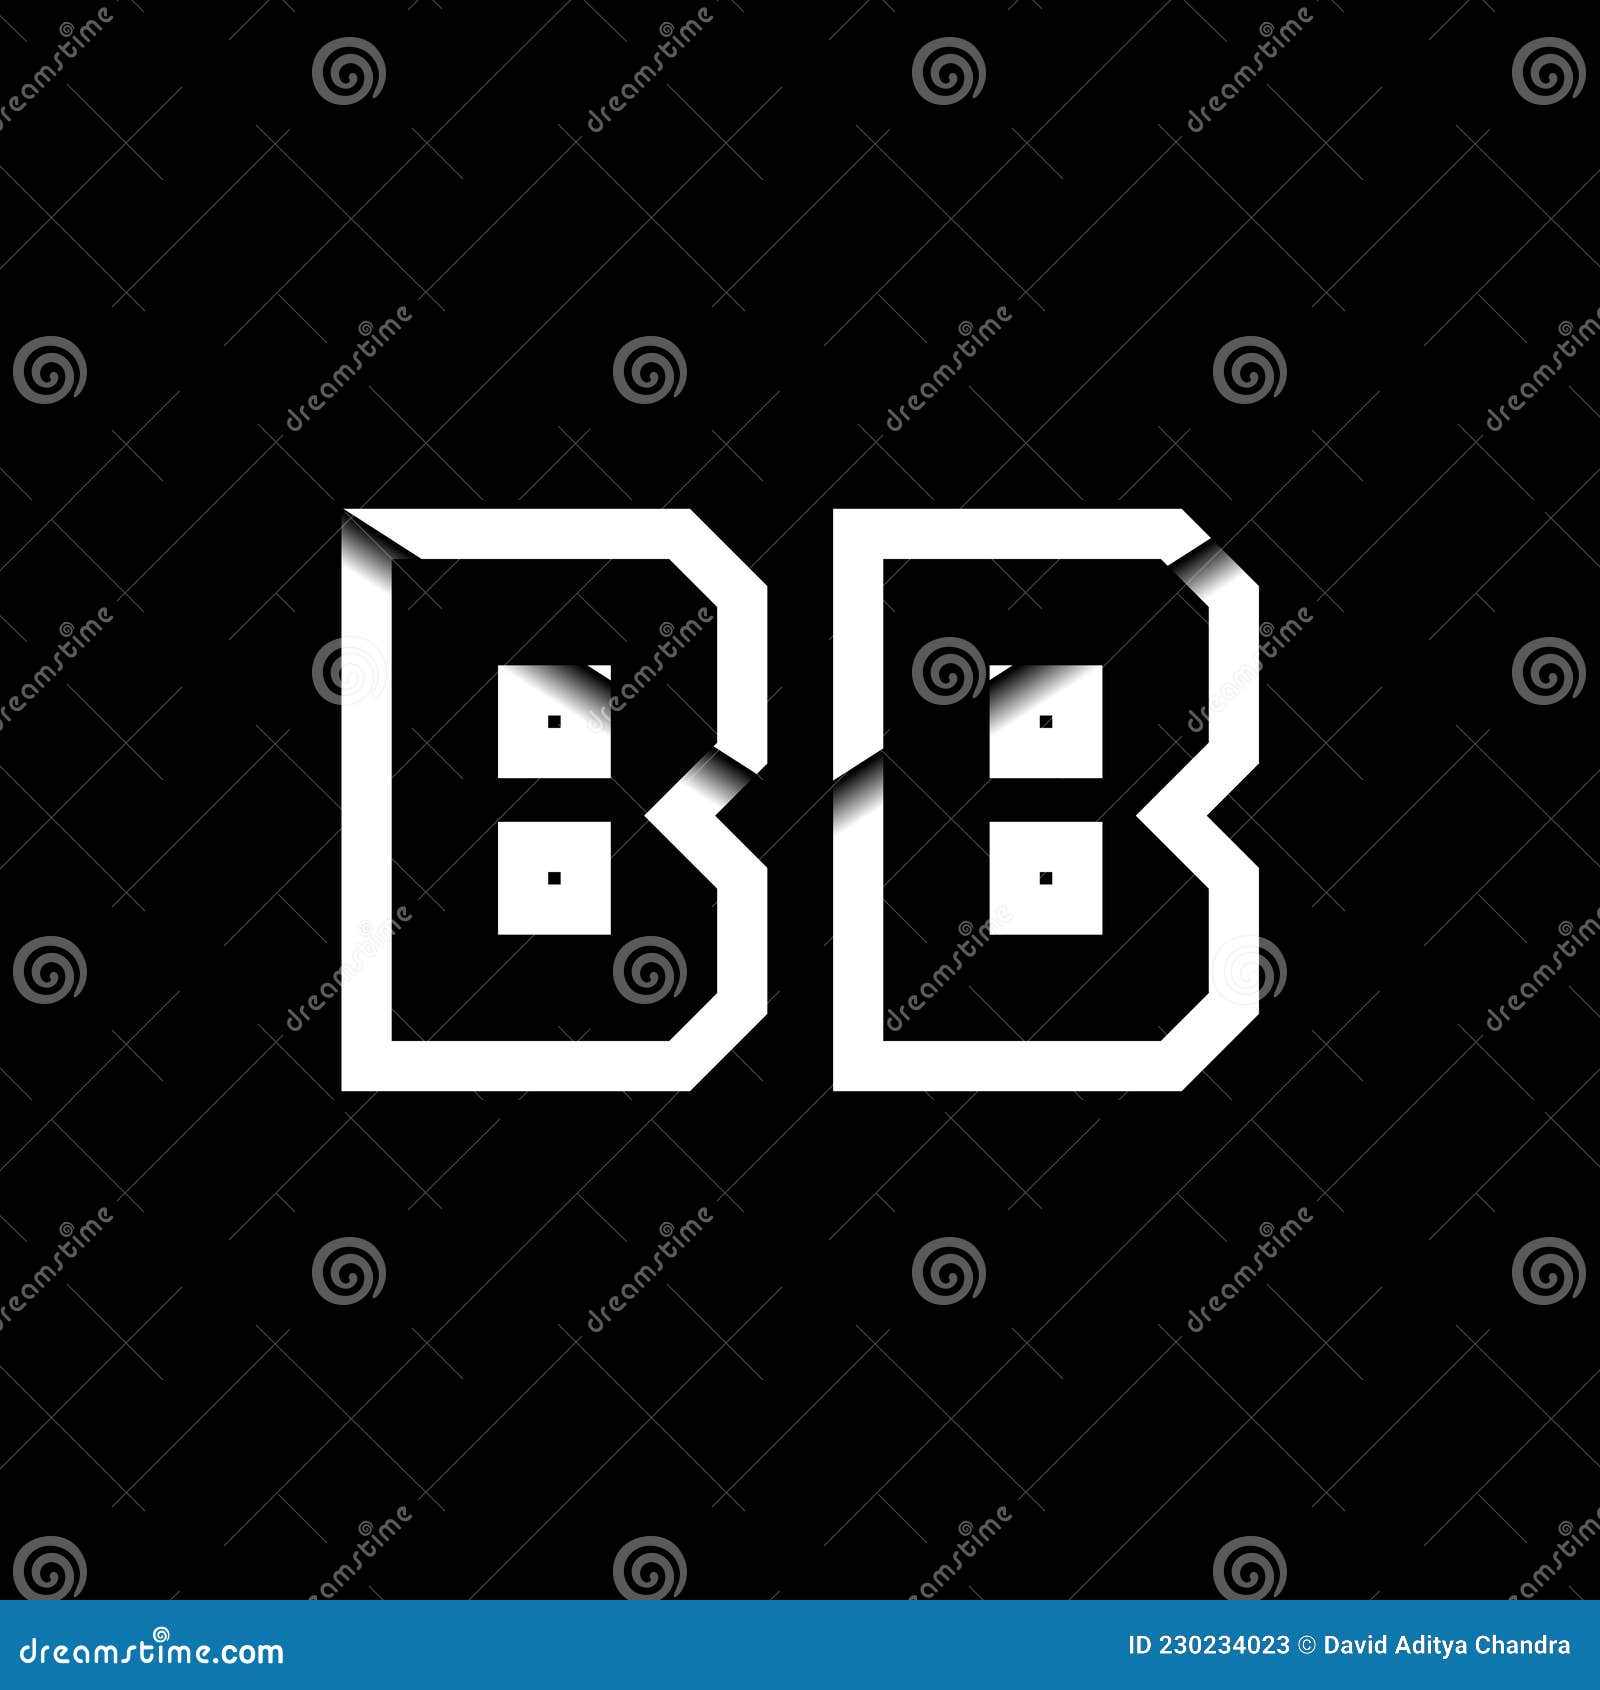 bb monogram vs